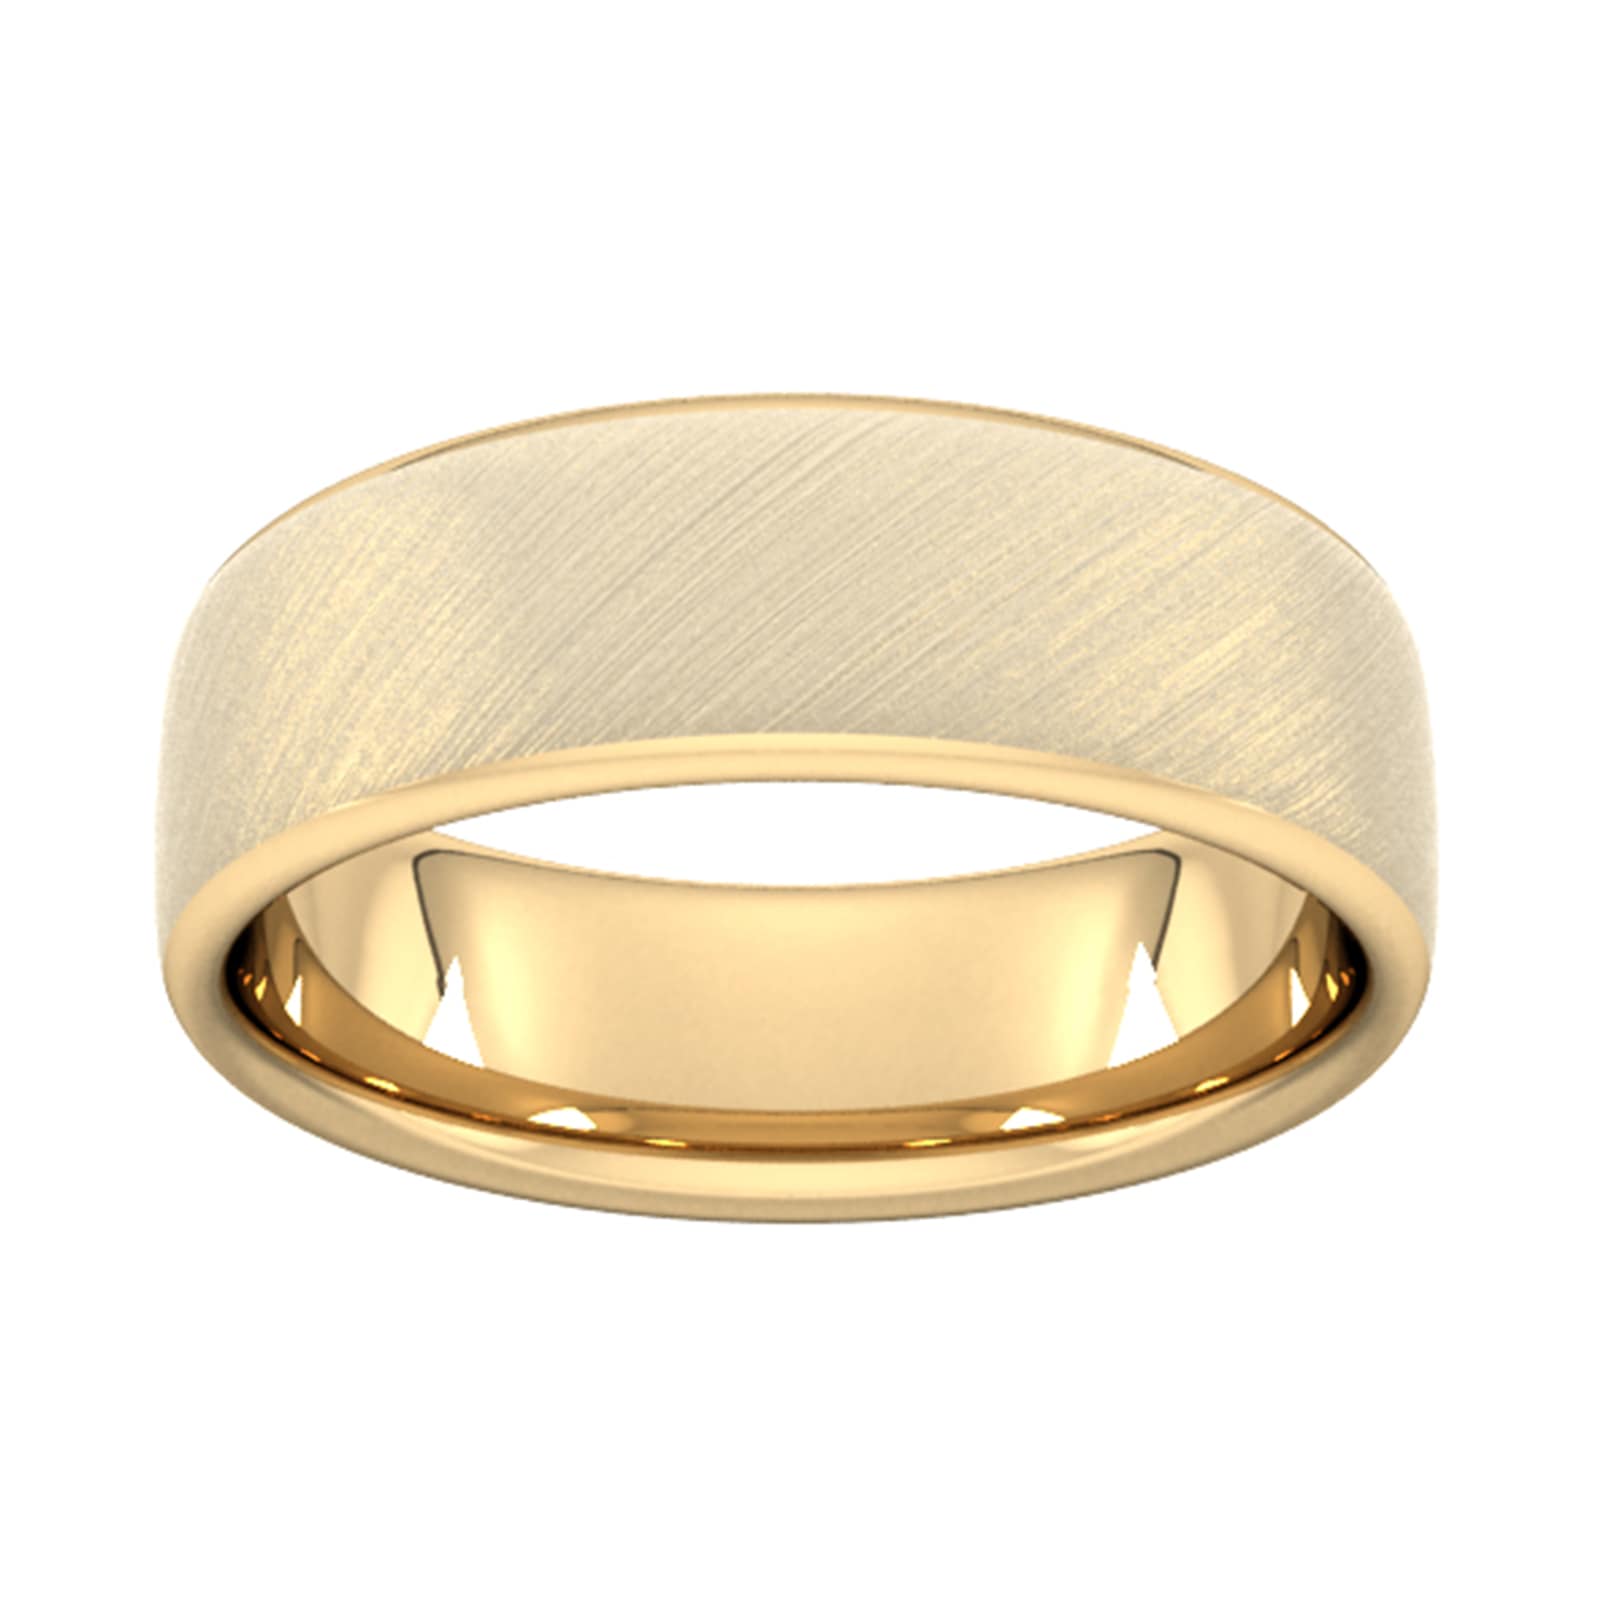 7mm D Shape Standard Diagonal Matt Finish Wedding Ring In 9 Carat Yellow Gold - Ring Size N